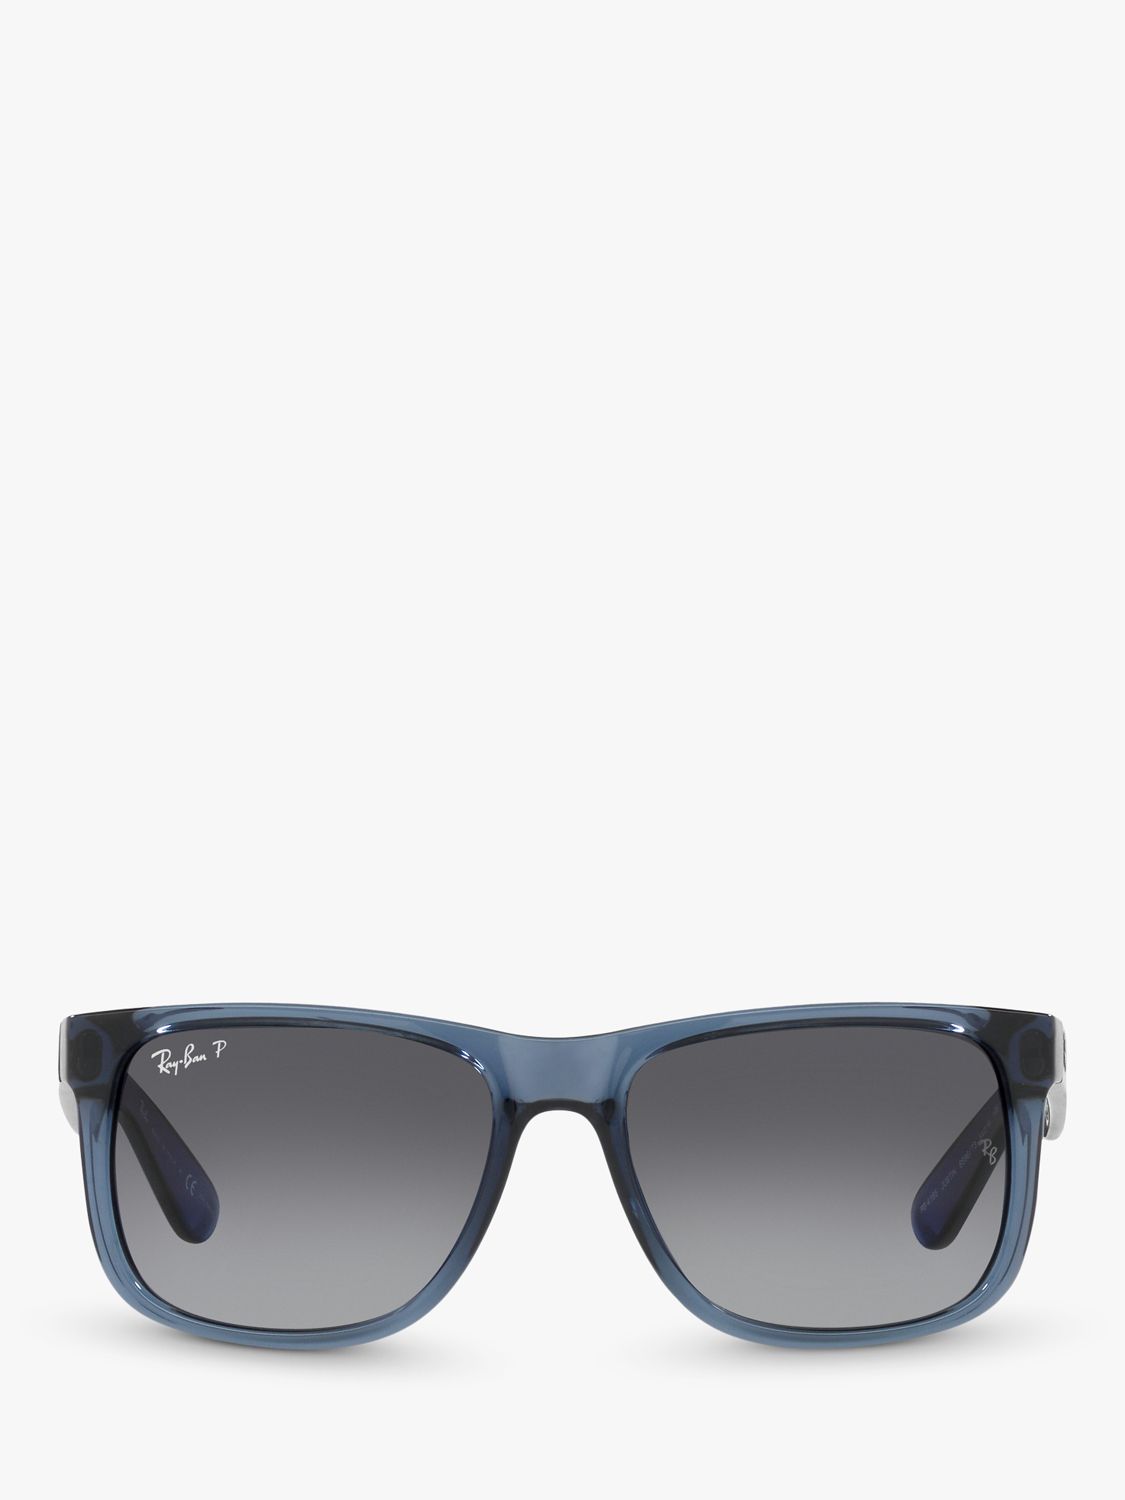 Ray-Ban RB4165 Men's Polarised Justin Square Sunglasses, Transparent  Blue/Grey Gradient at John Lewis u0026 Partners